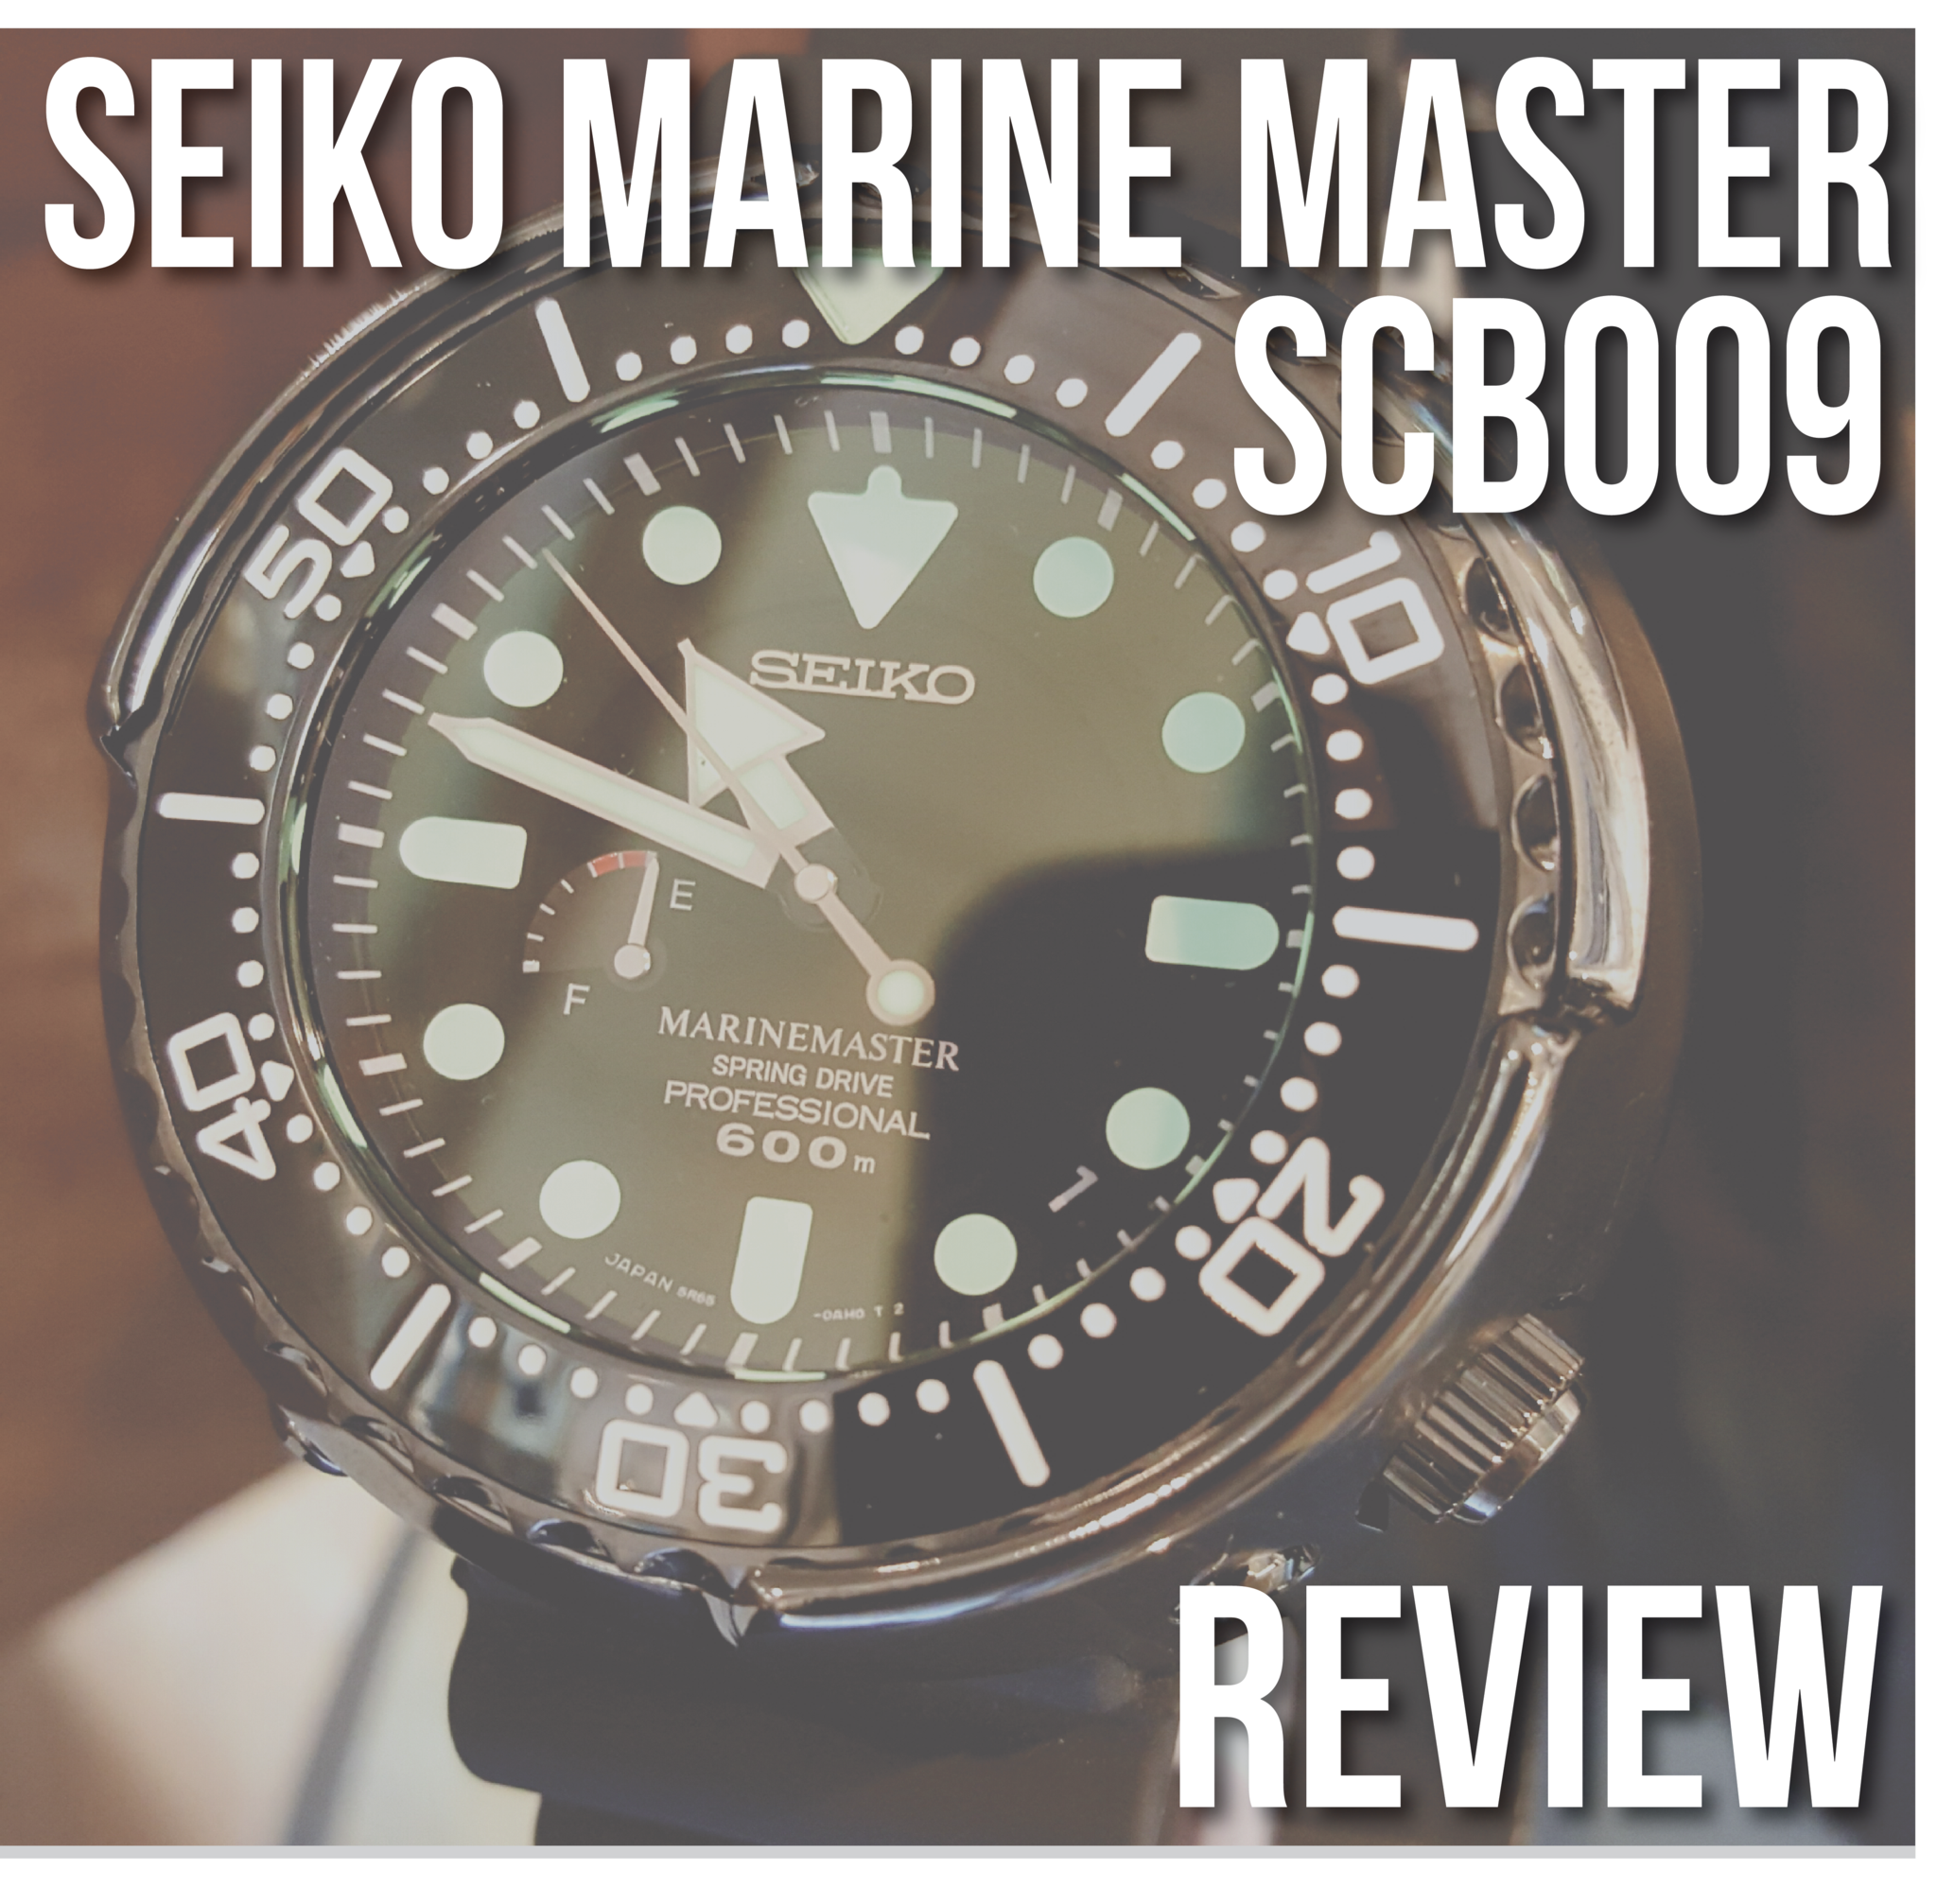 Seiko Marine Master SBDB009 Review